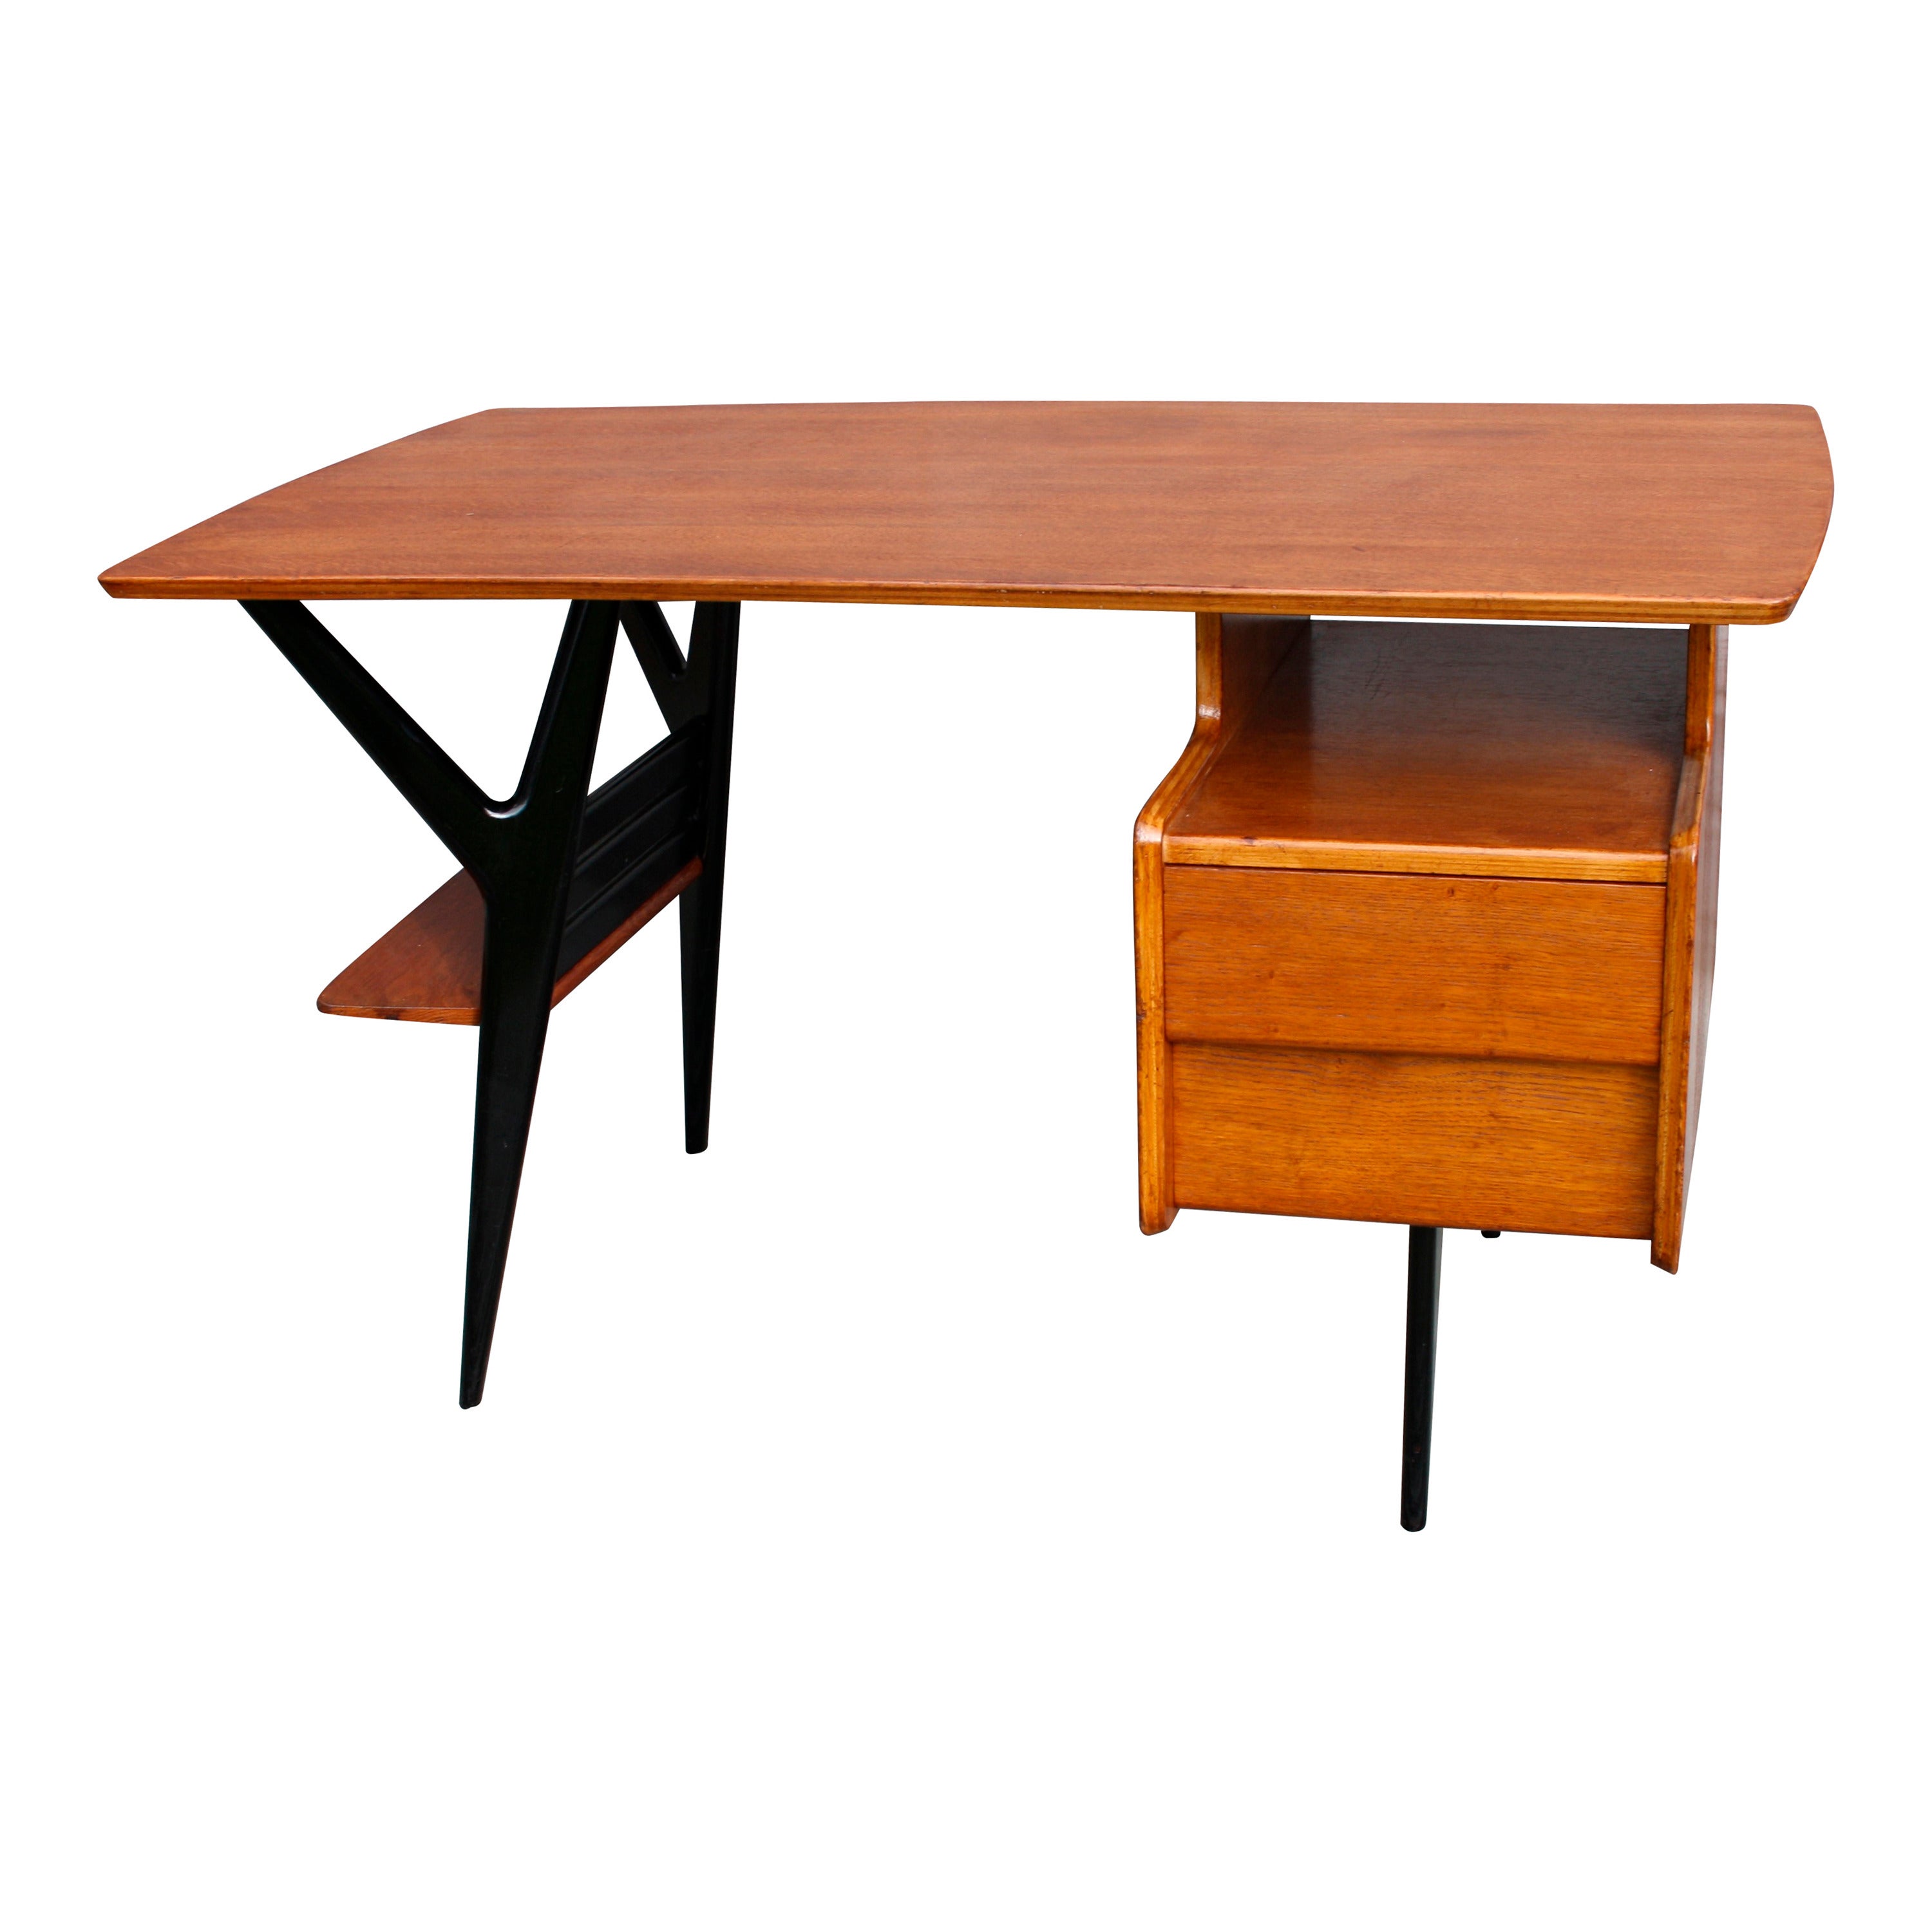 Very Rare Desk By Louis Paolozzi For Guermonprez - France 1950's ipso facto